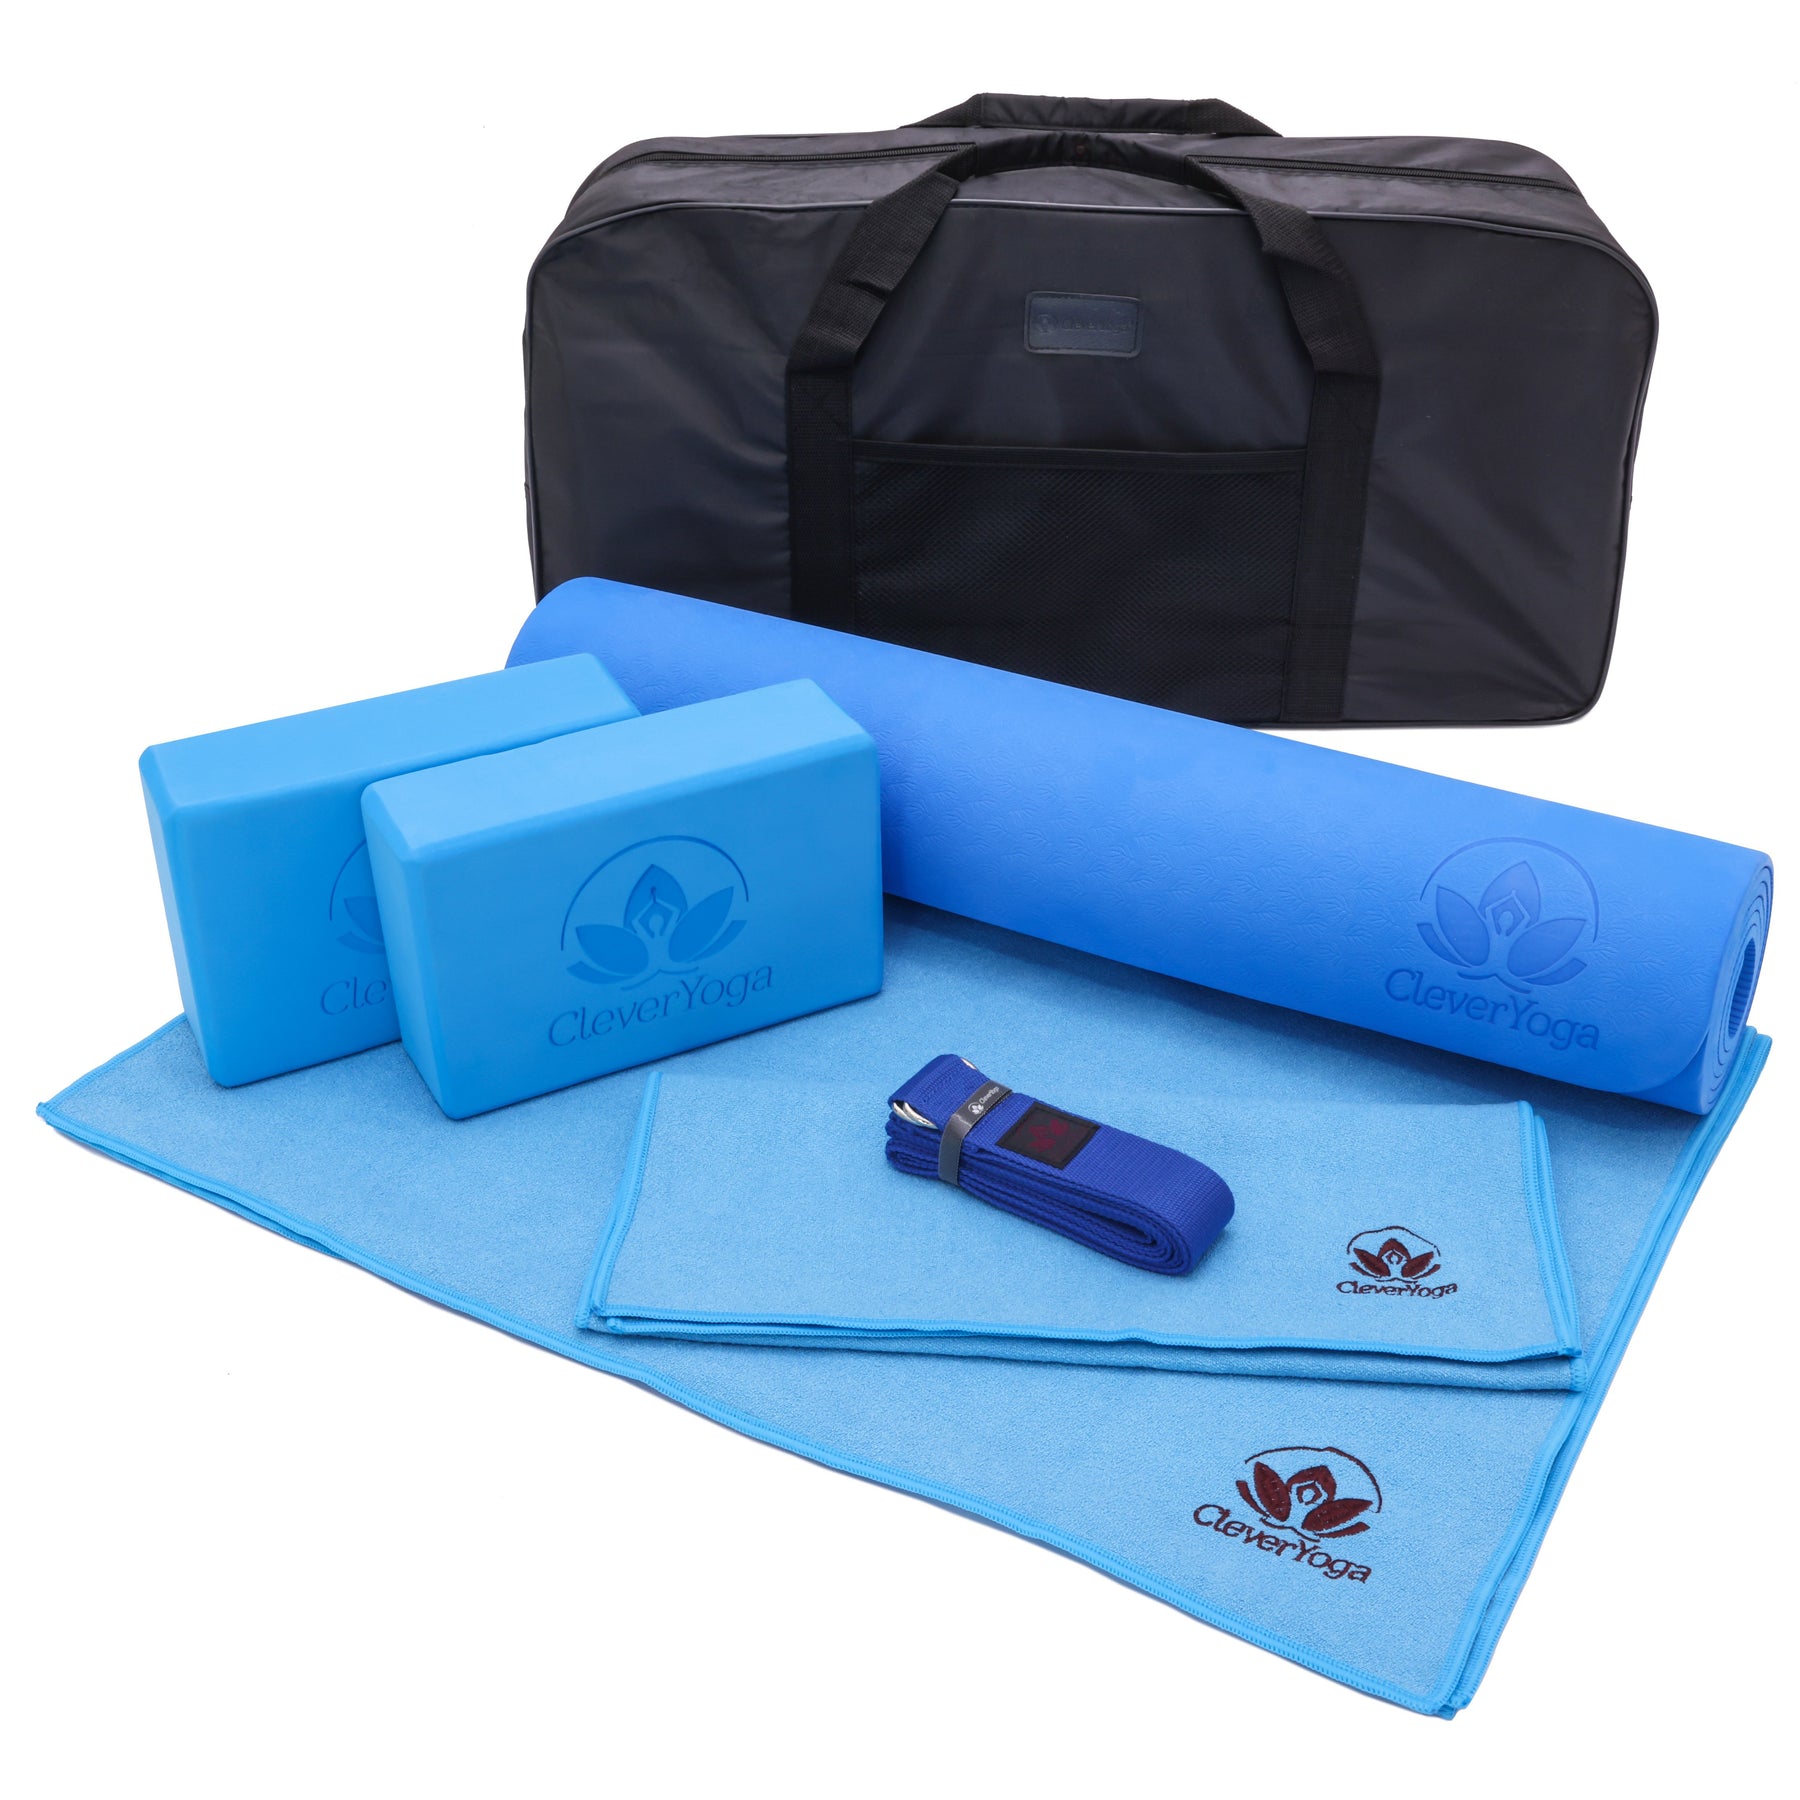  pete's choice Yoga Set for Beginners – Yoga Wheel Kit + 2 Yoga  Blocks, Bonus eBook & Free Yoga Strap, Yoga Starter Kit for Beginners